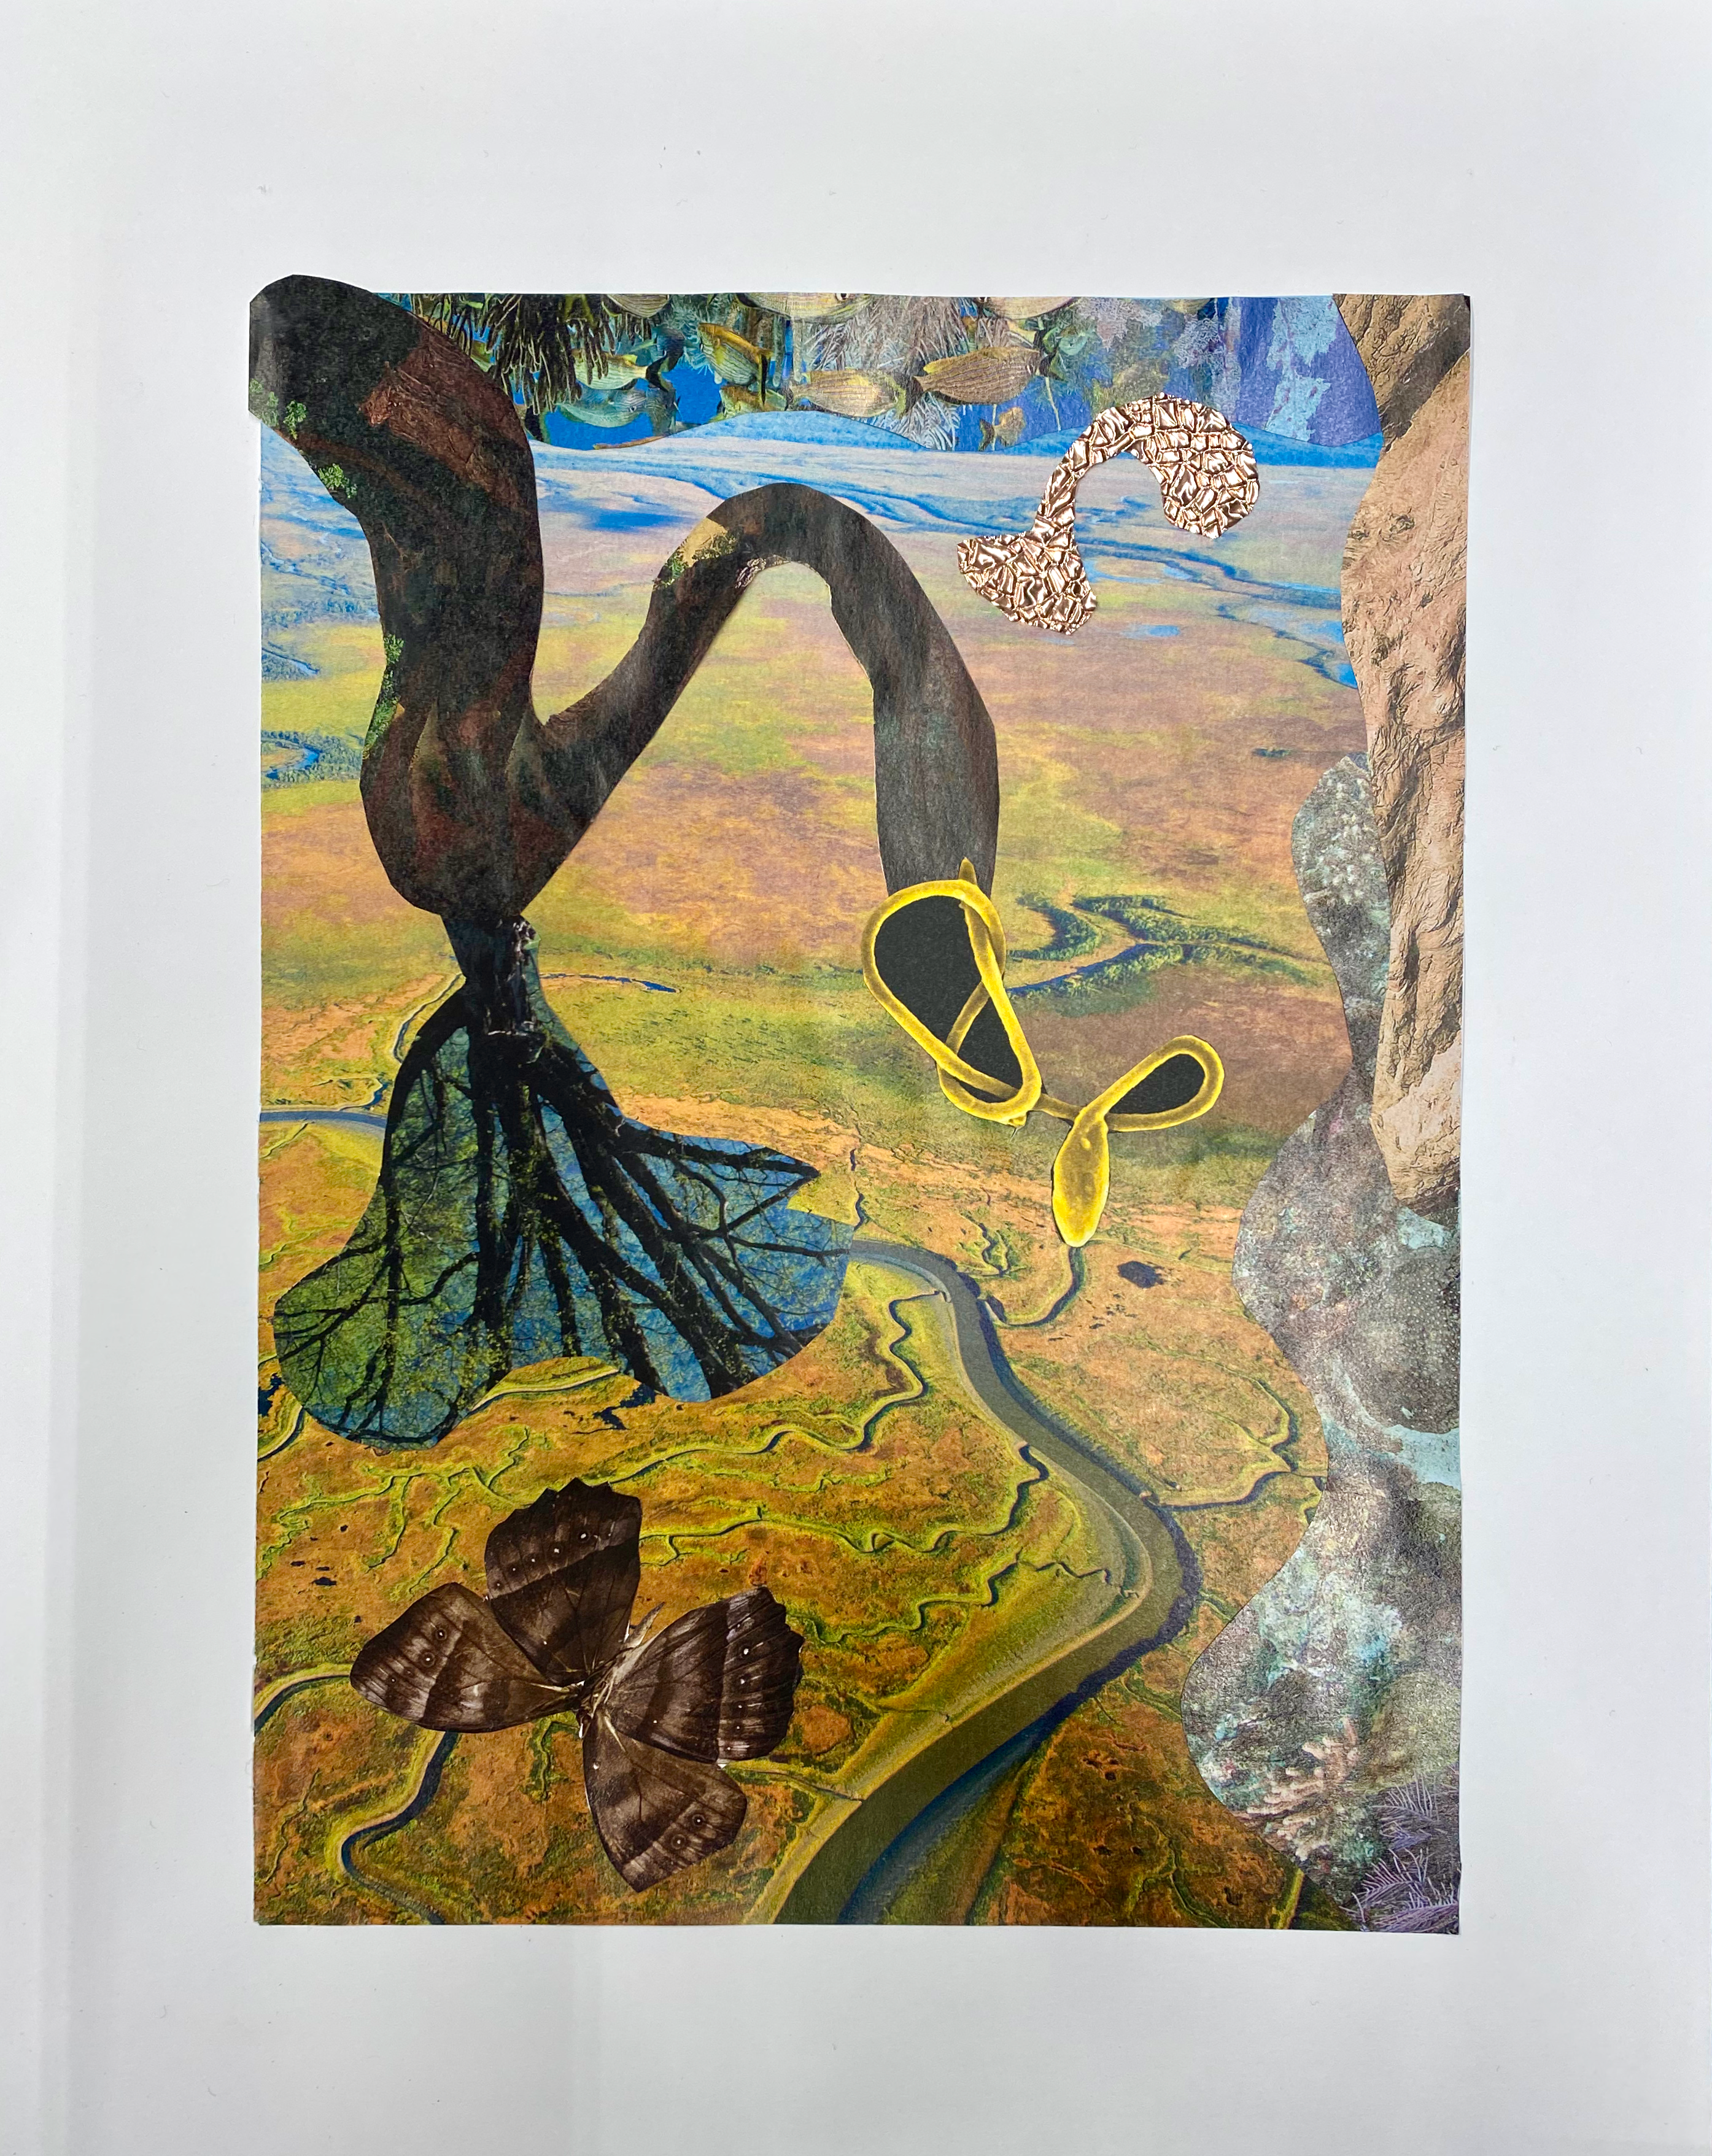 Terri Binder, "Earth Dance", 2022, paper collage on paper